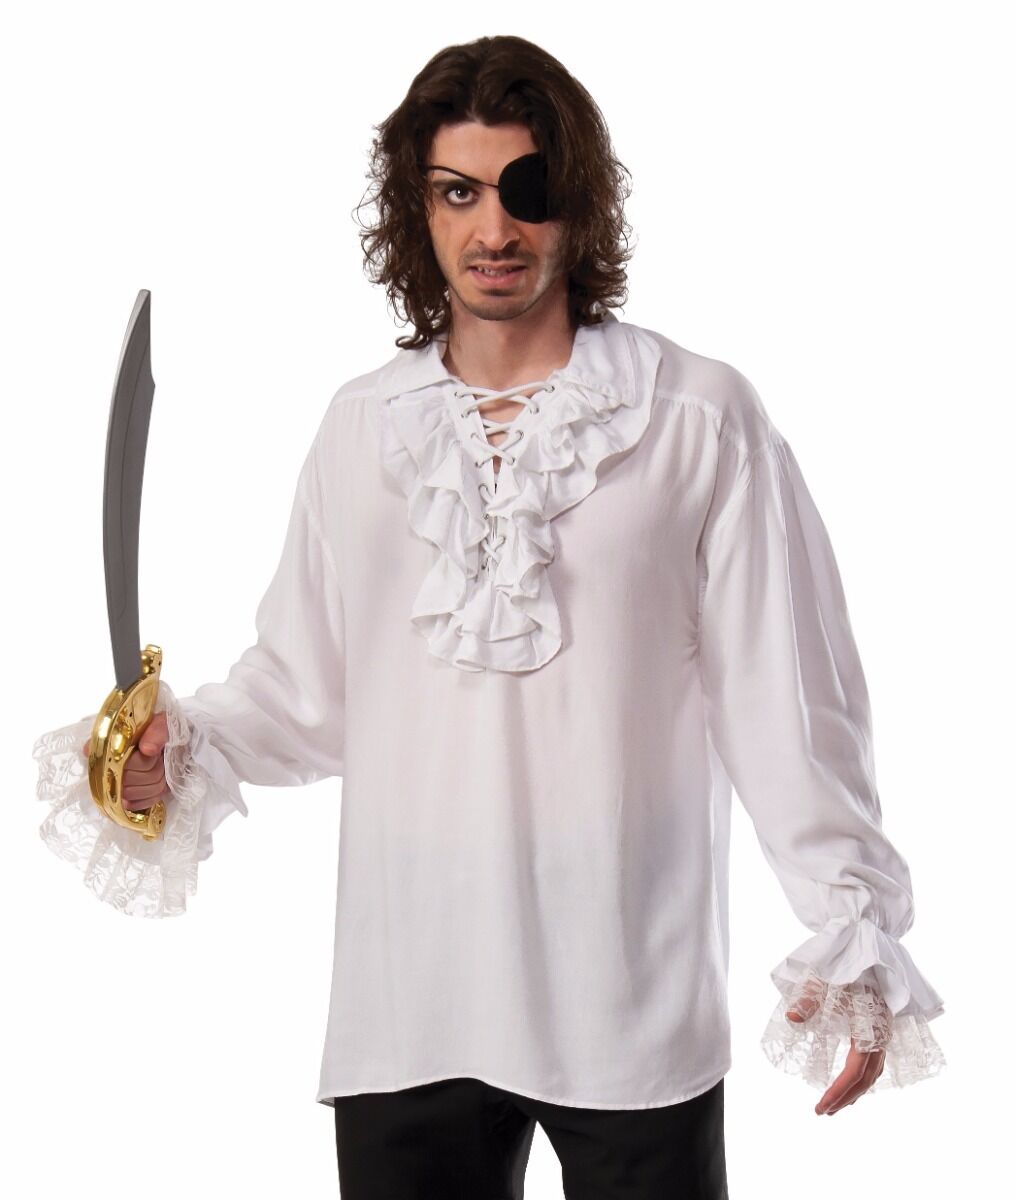 Ruffled Pirate Shirt Renaissance Colonial Gothic Dracula Poet Vampire White Fast